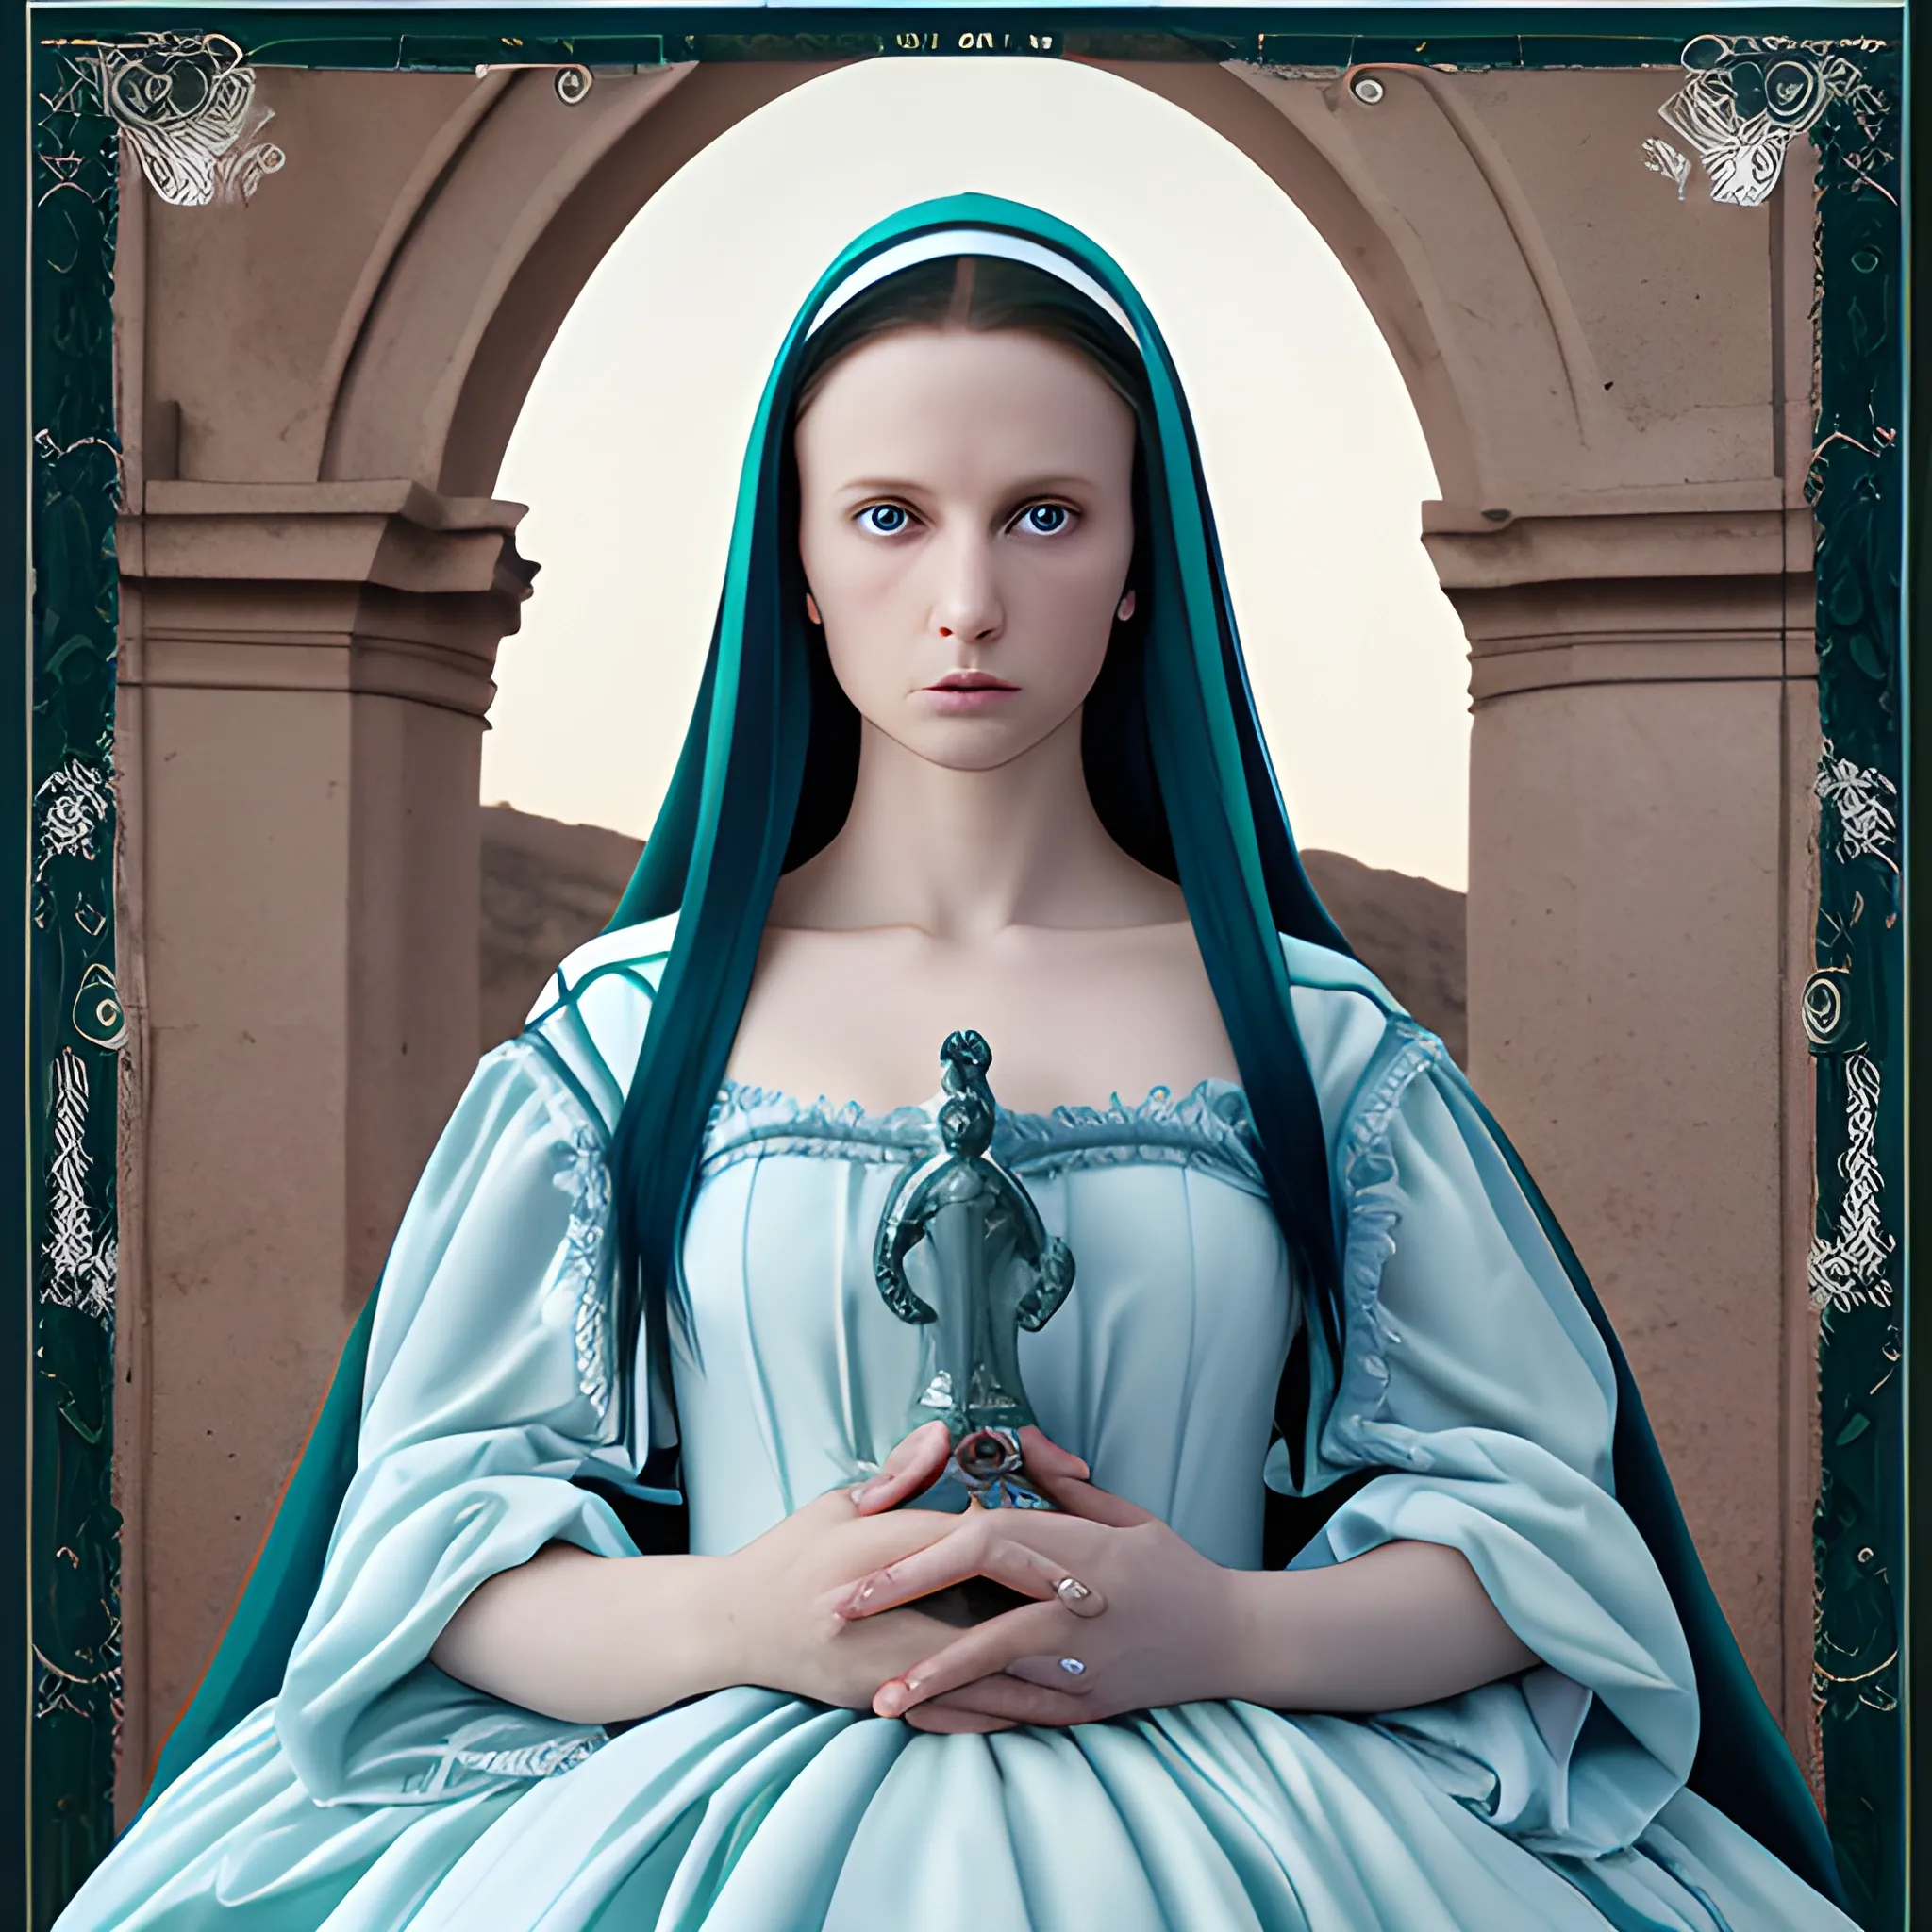 Ave Maria 5, reality, photoshoot, portrait